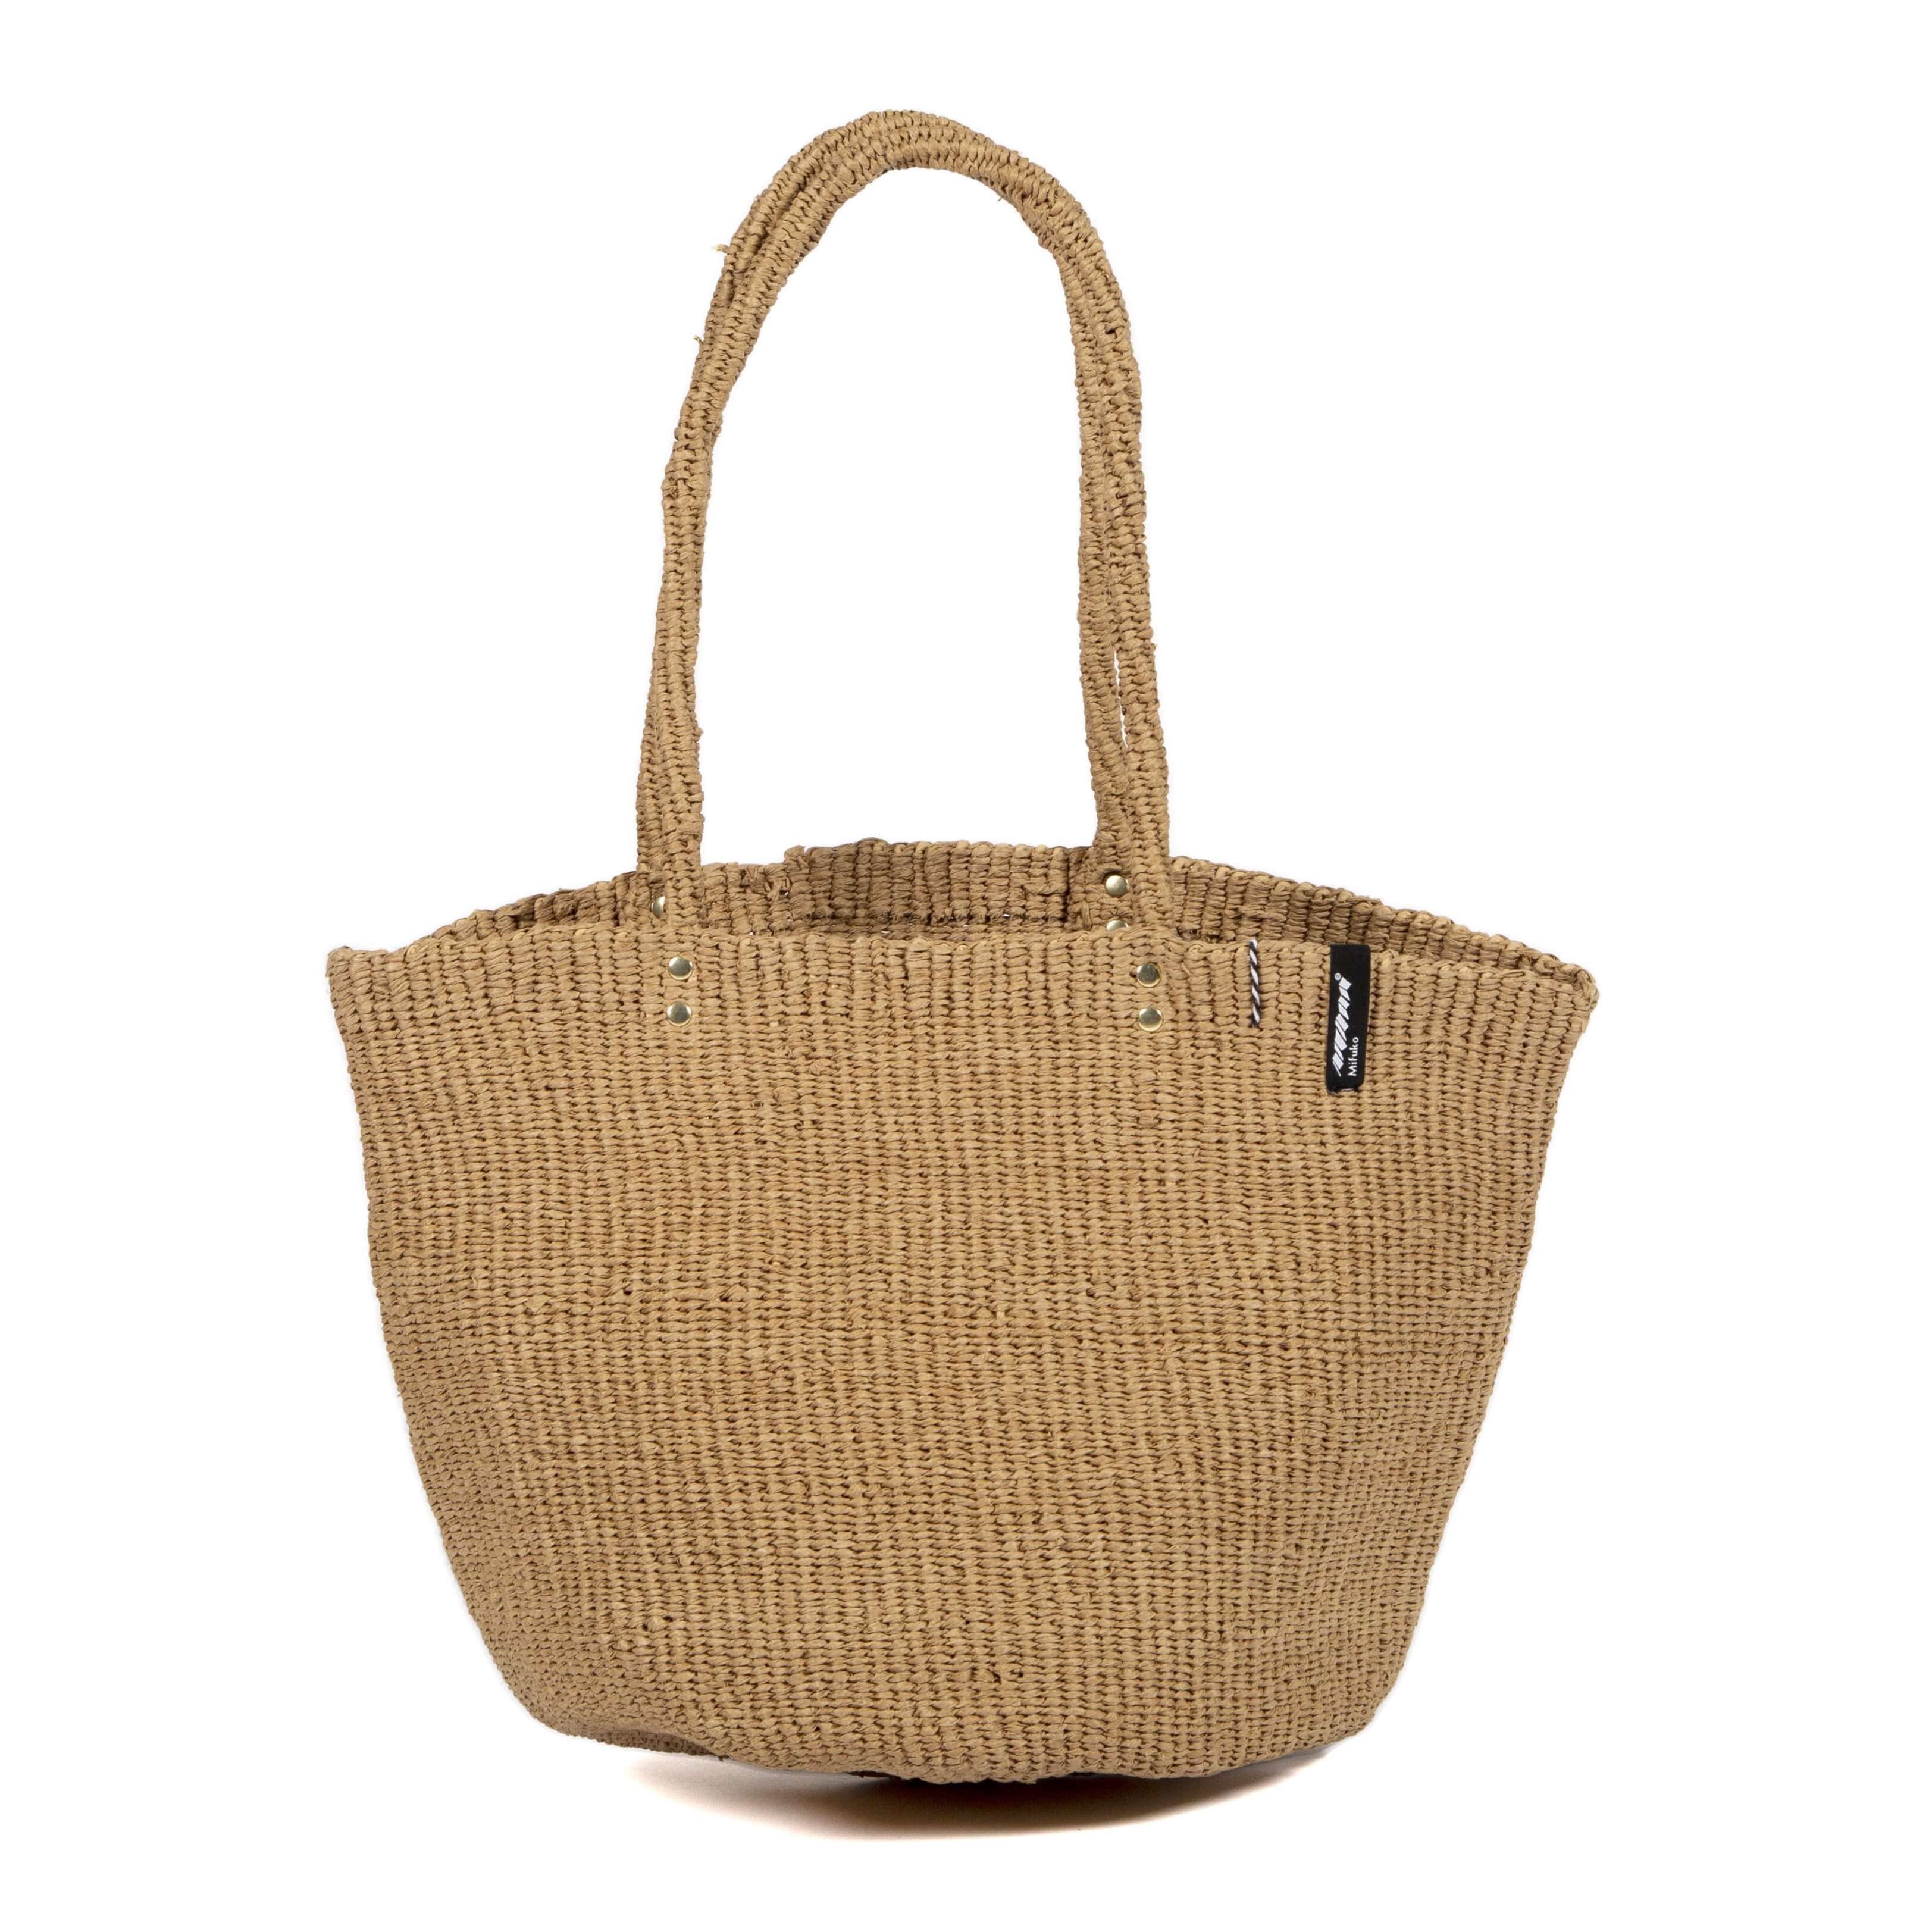 Kiondo shopper basket | Brown woven handle M